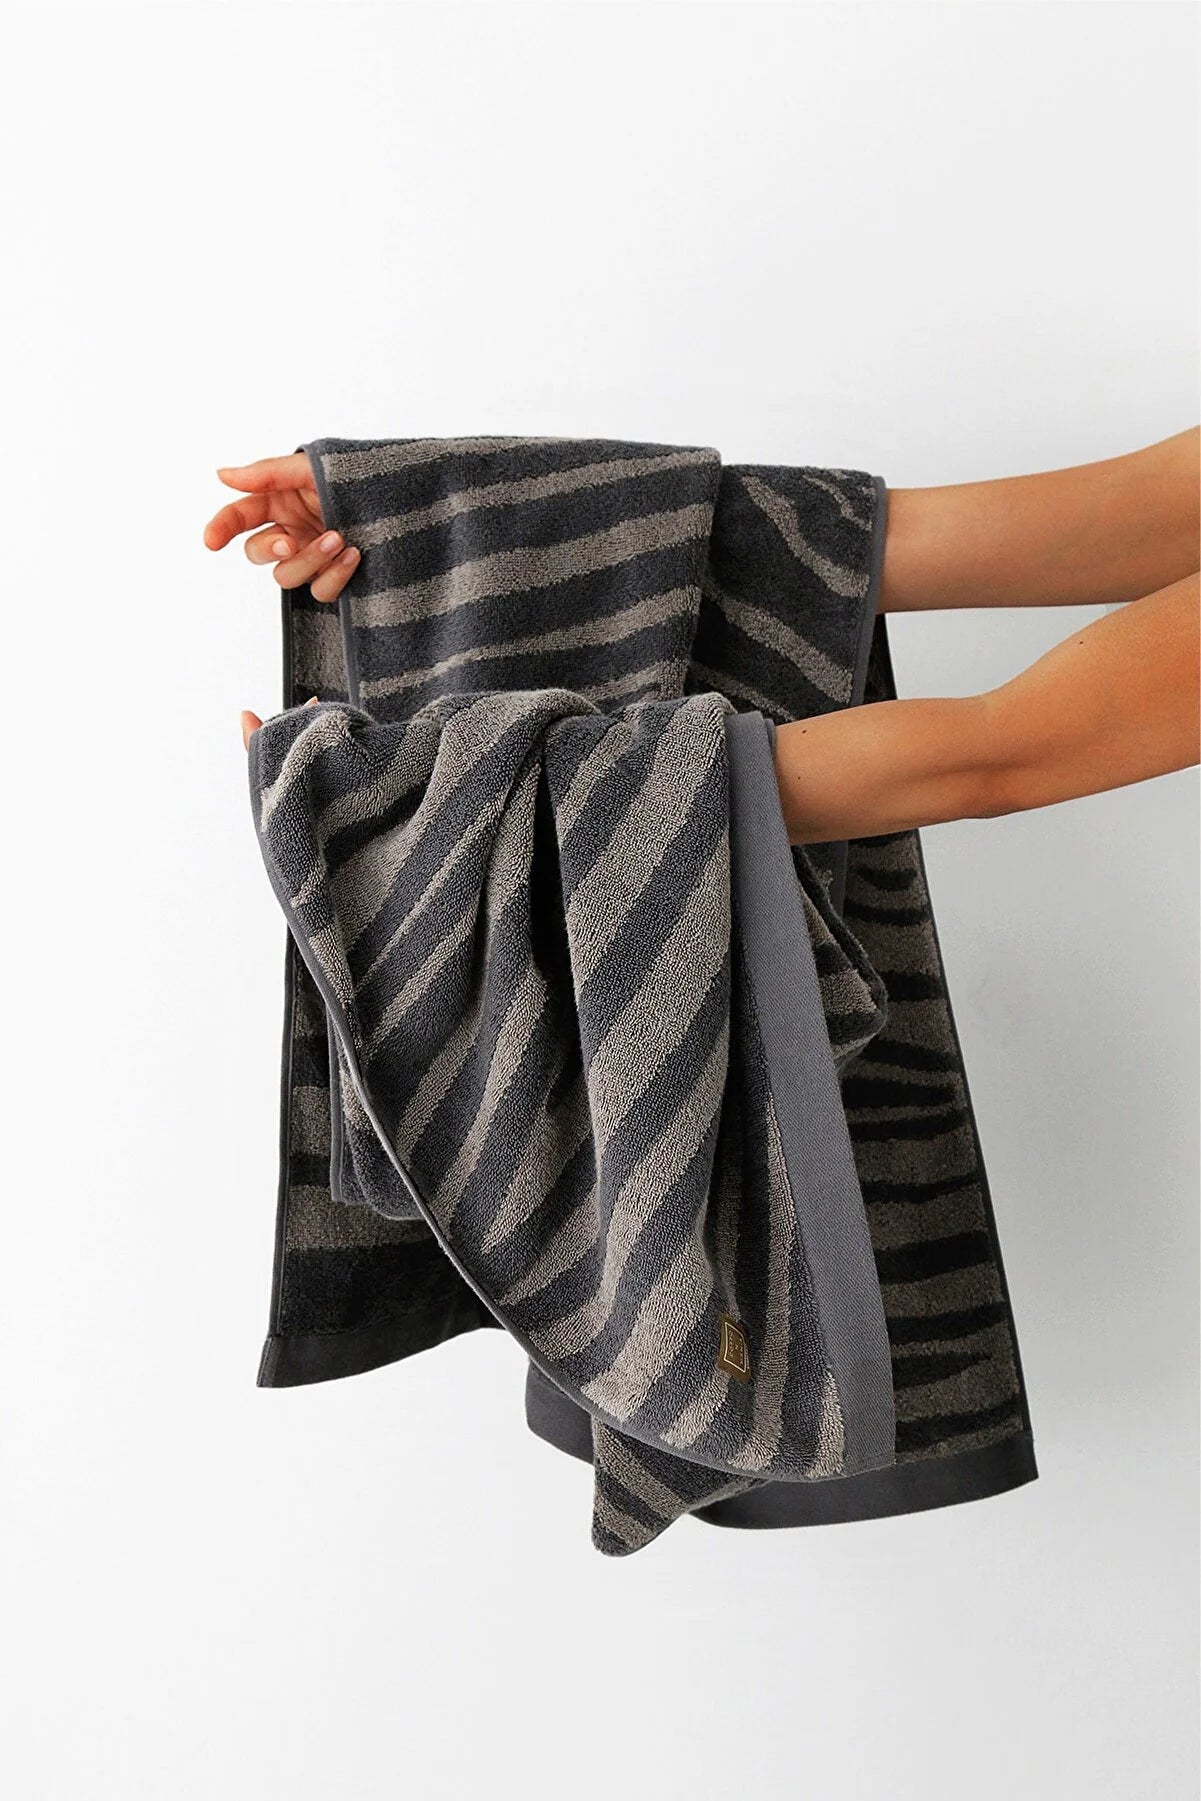 Plaje – Oversize Limited, Extra Large Extra Wide Oversize Towel